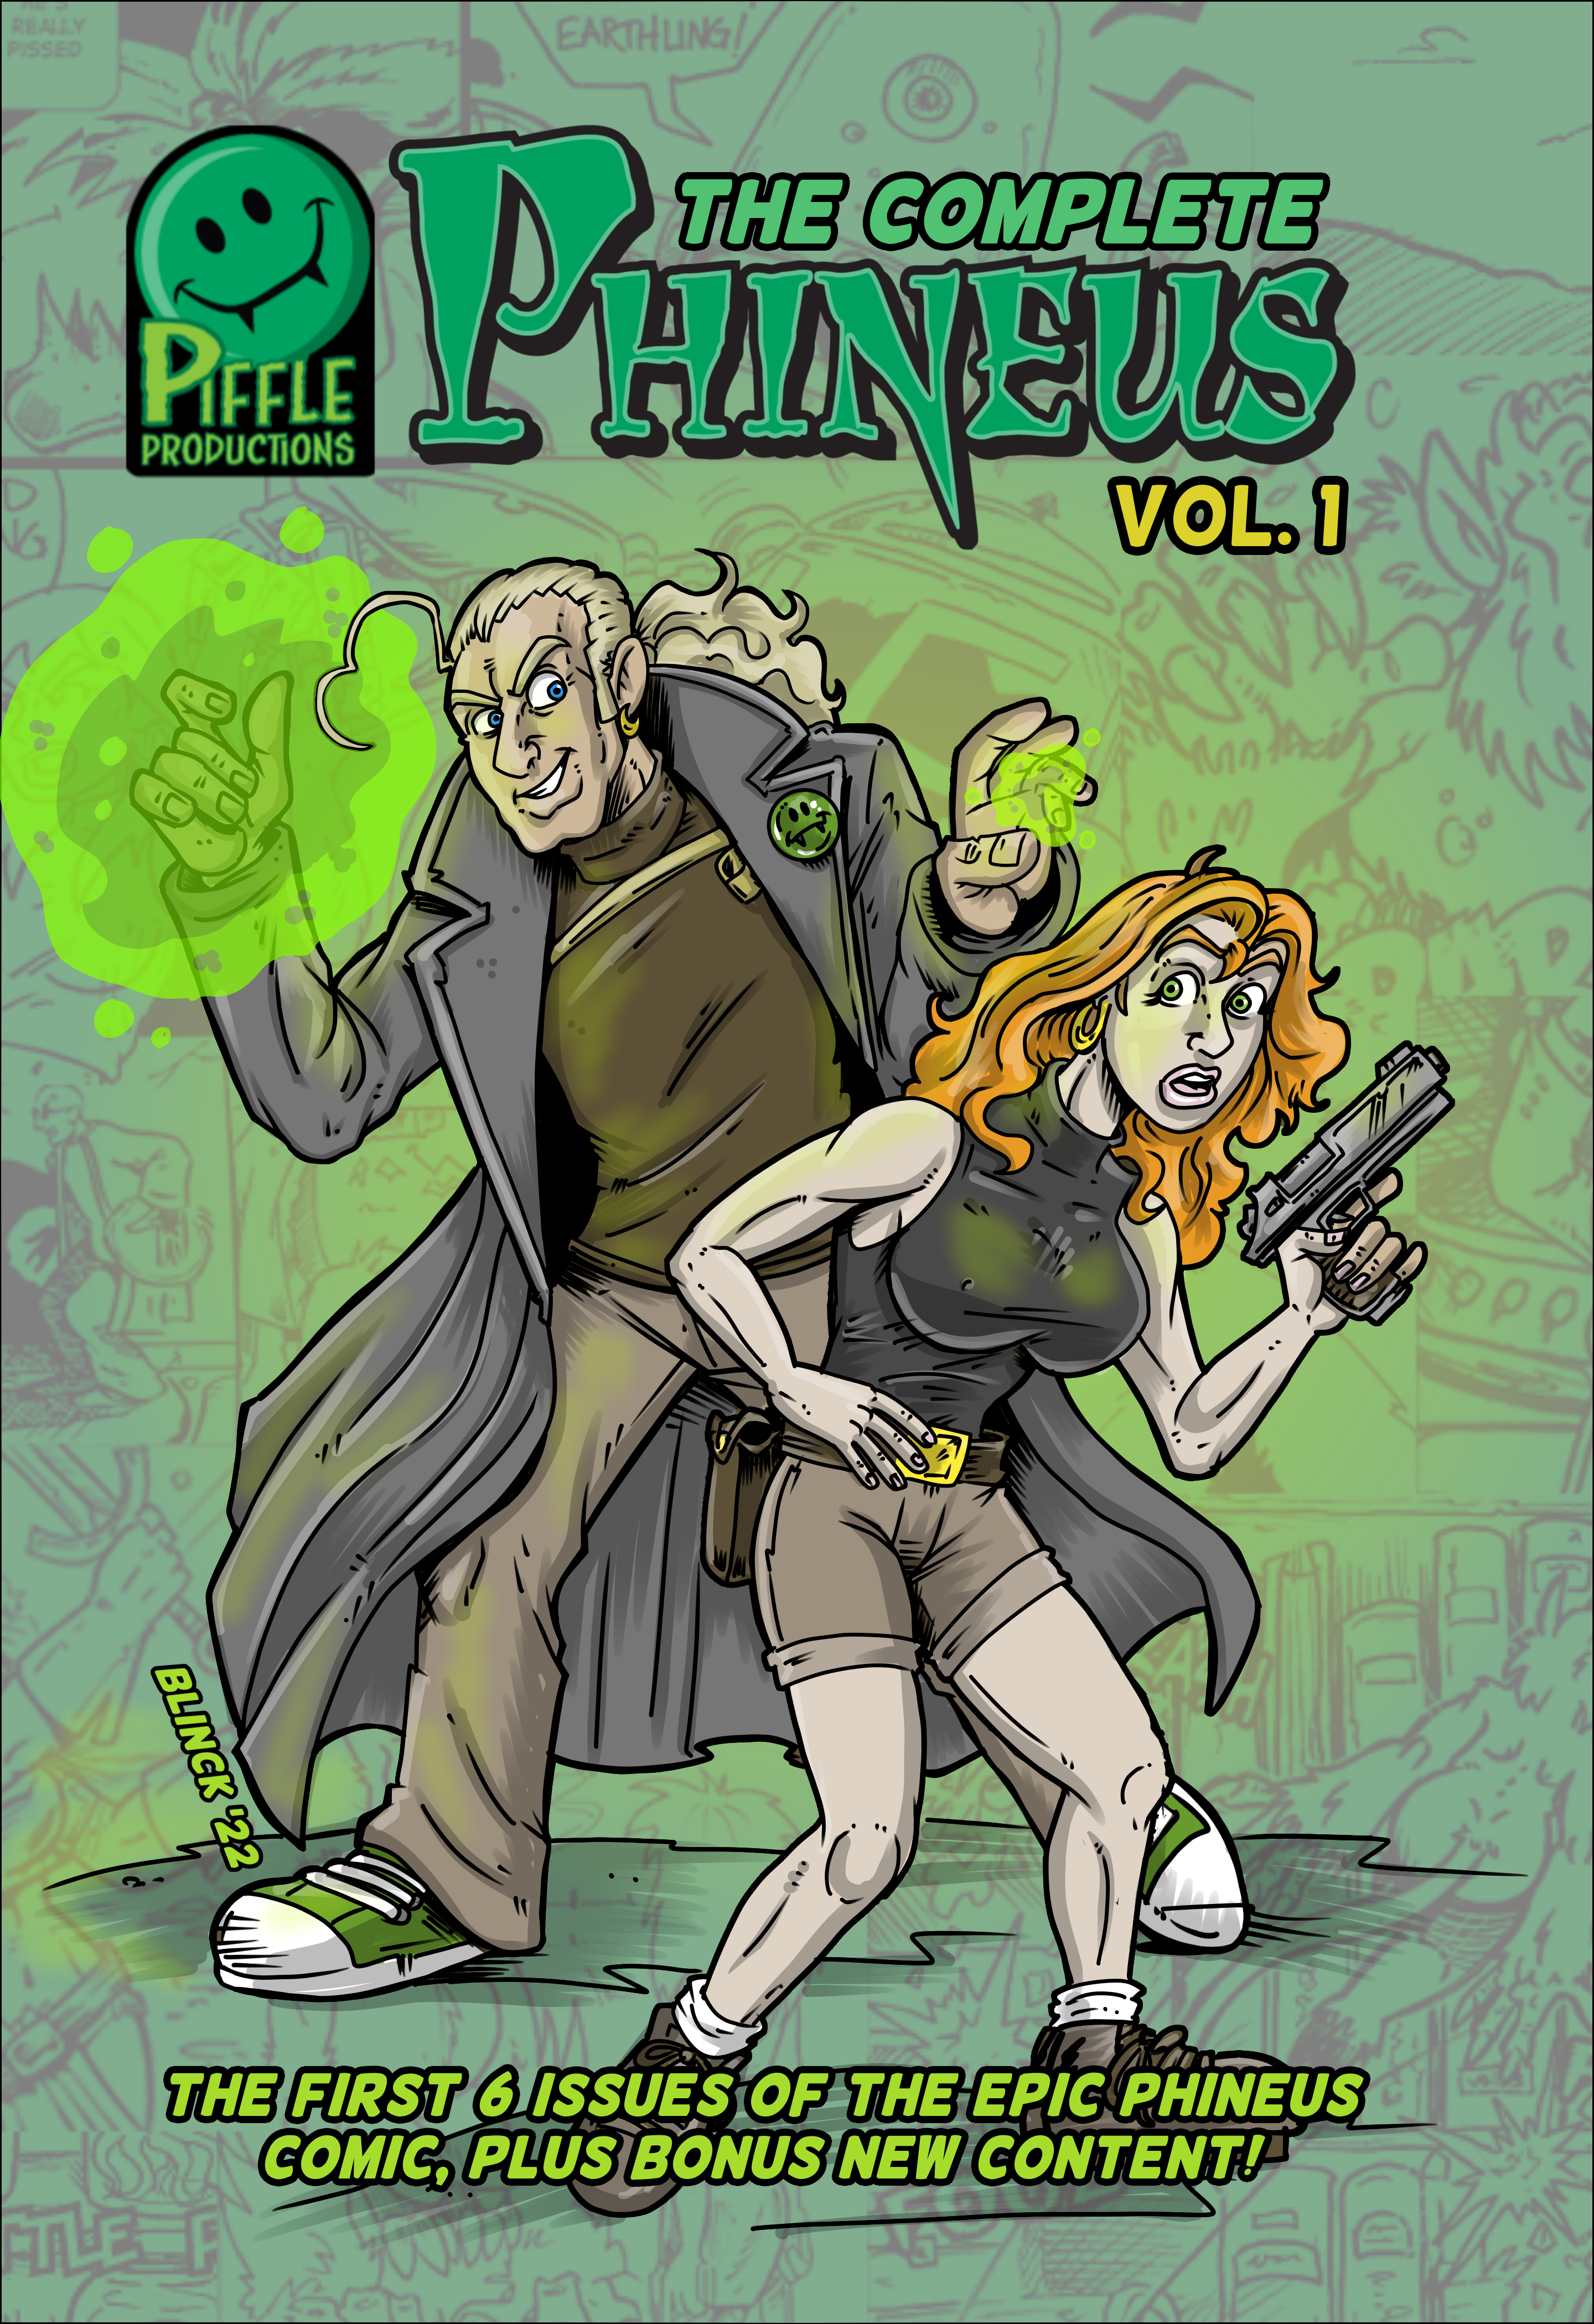 Complete Phineus Vol 1 Cover